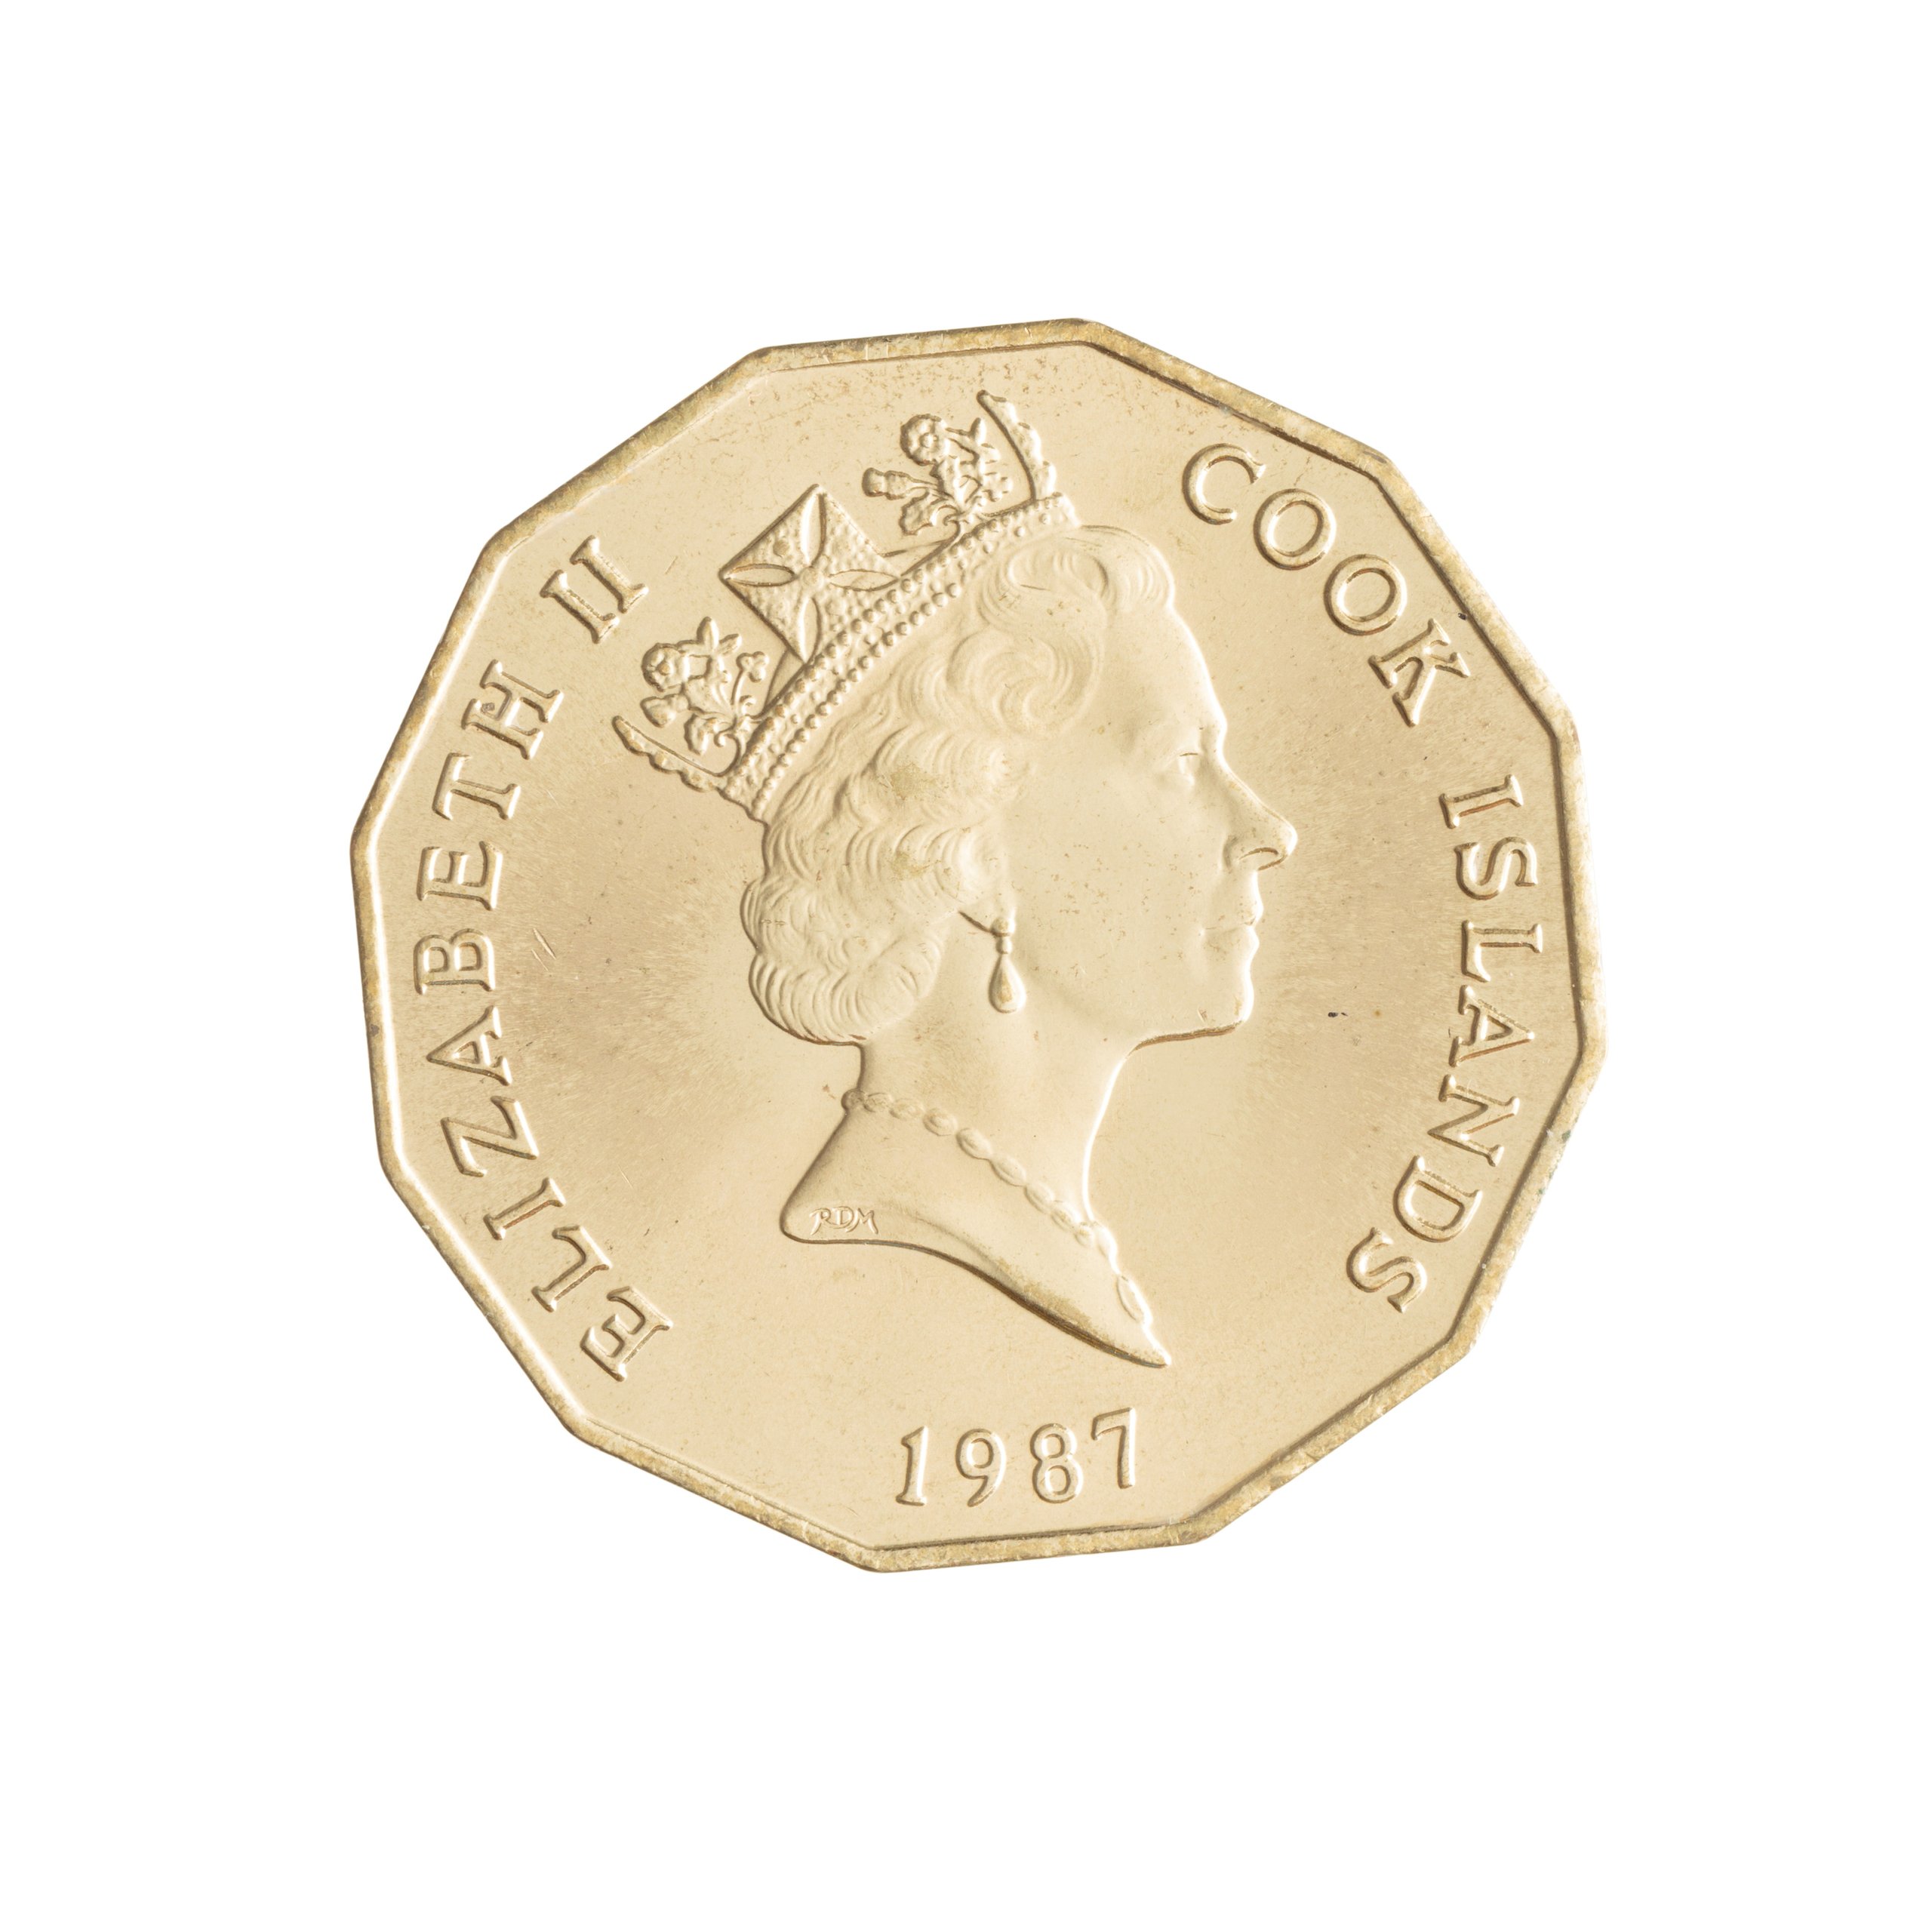 Cook Islands Five Dollar coin